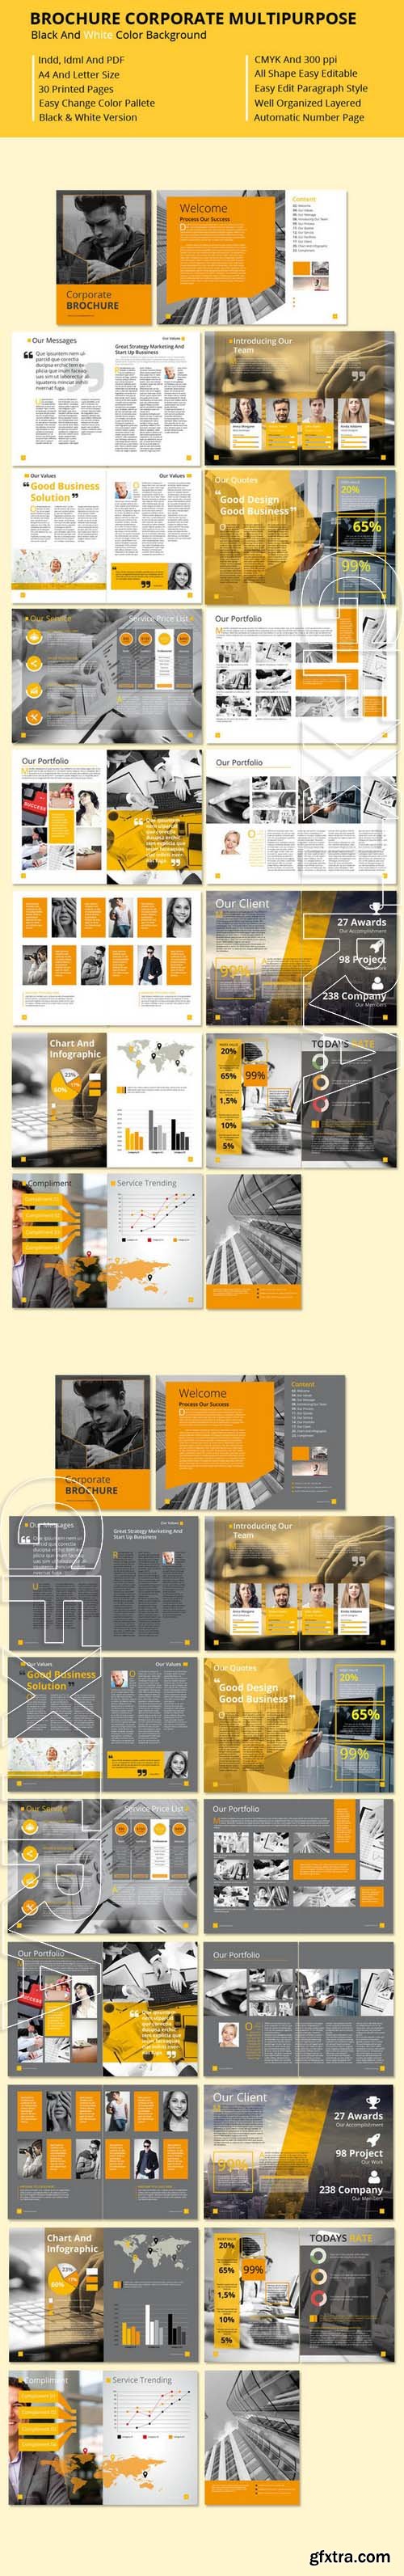 Brochure Corporate Multipurpose - CM 291828